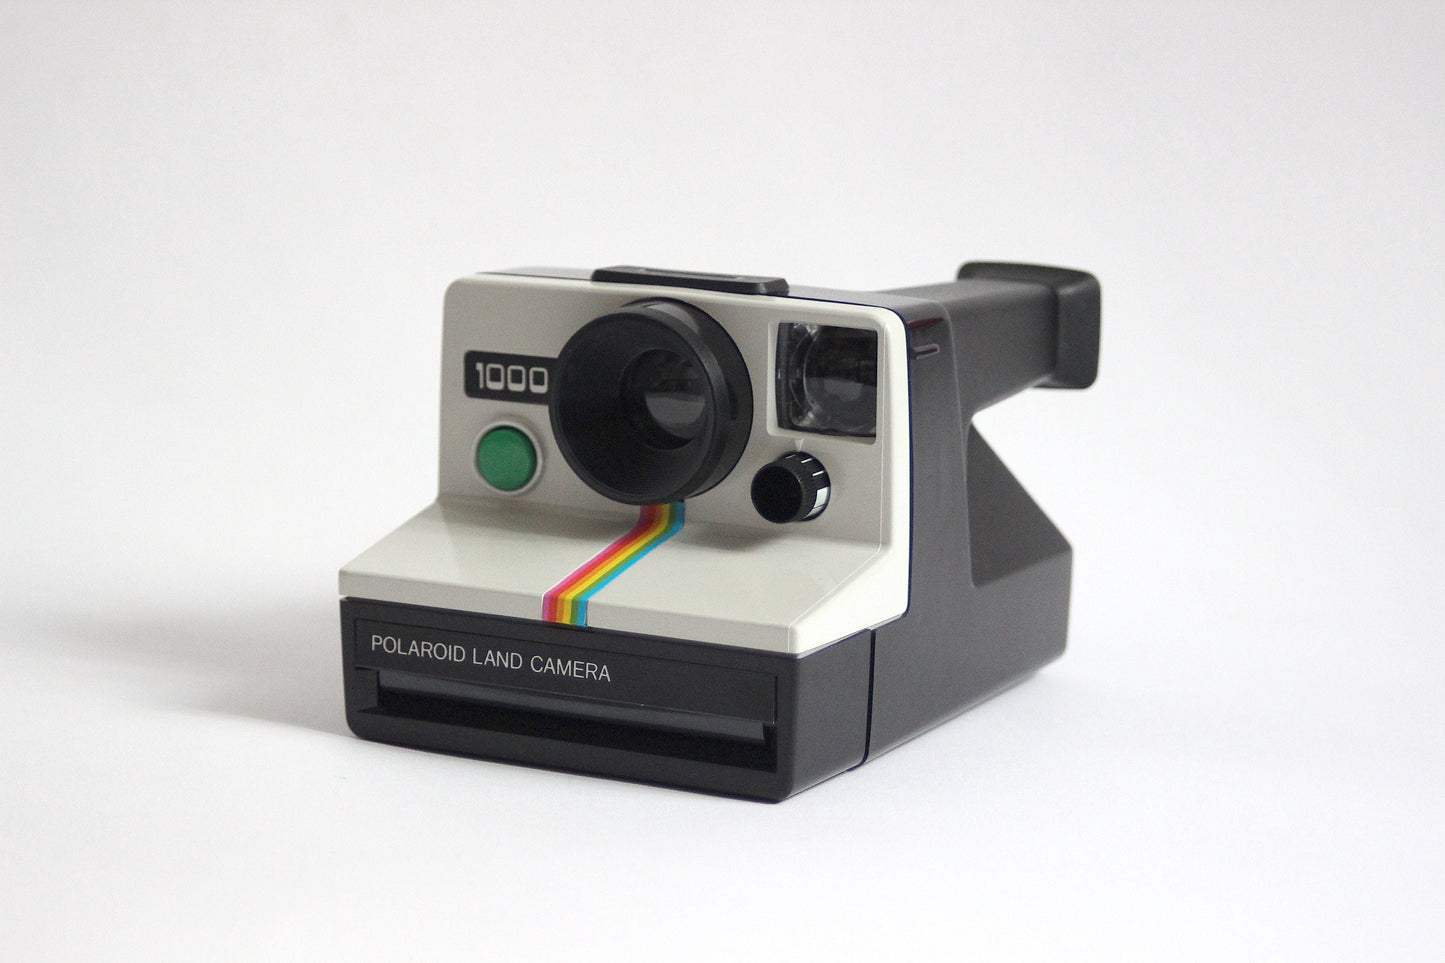 Polaroid 1000 Land Camera - green shutter button